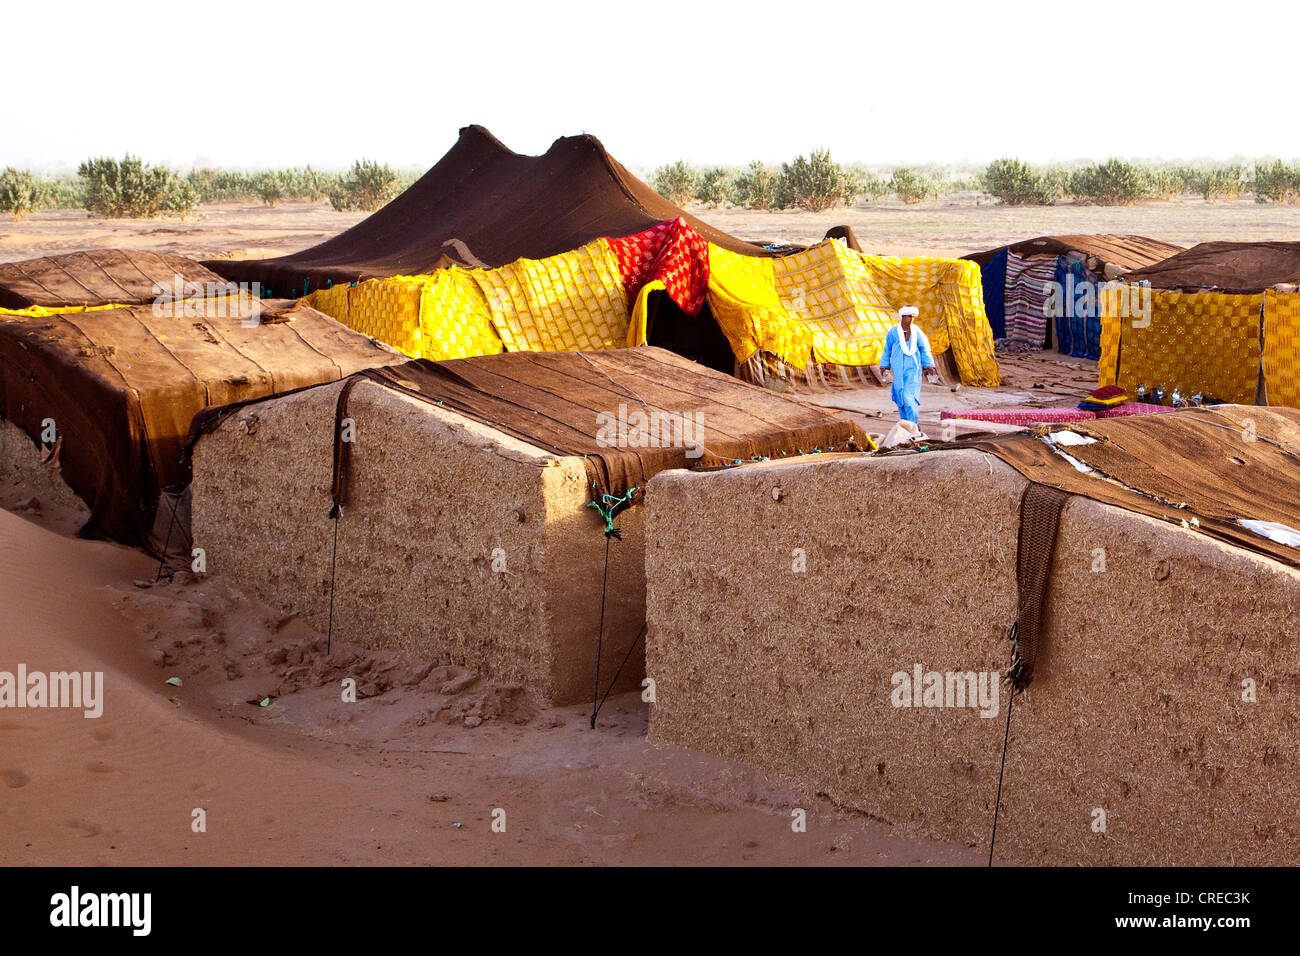 Desert camp for tourists in the sand dunes of Erg Chegaga, Sahara Desert near Mhamid, Morocco, Africa Stock Photo